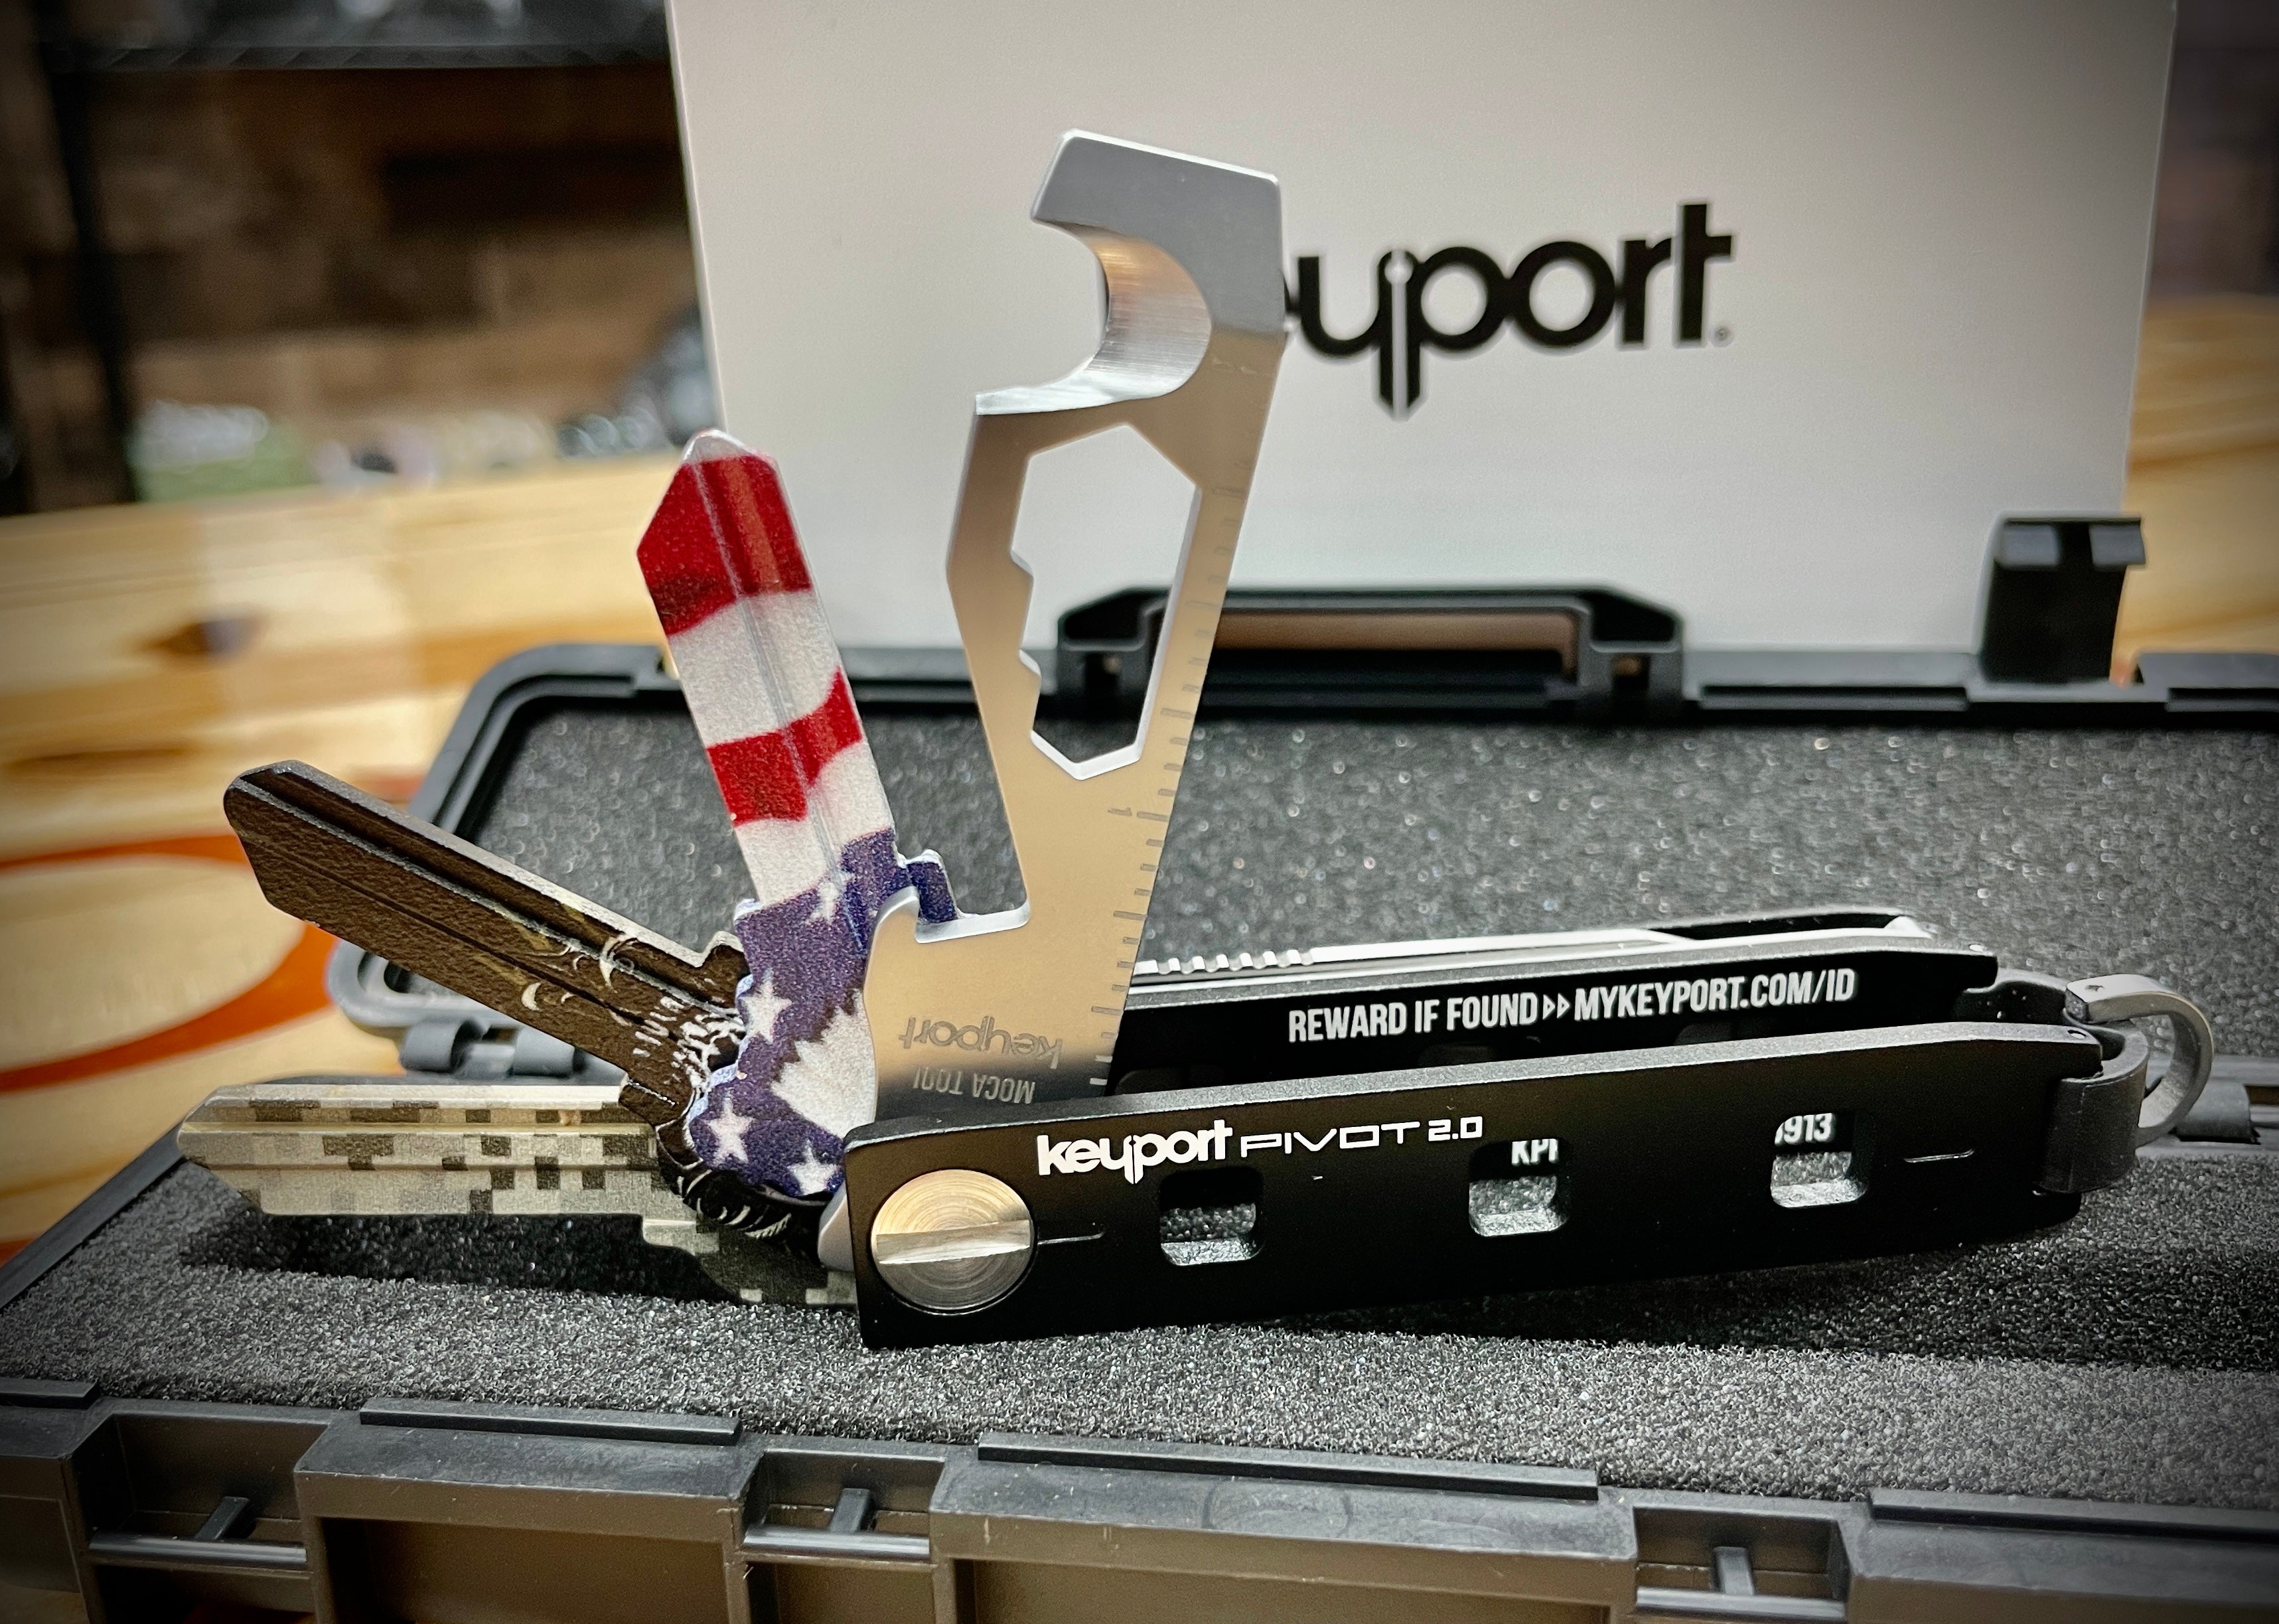 KeyPort Key Organizer + MOCA 10-in-1 Multi-Tool (Aluminum Black)